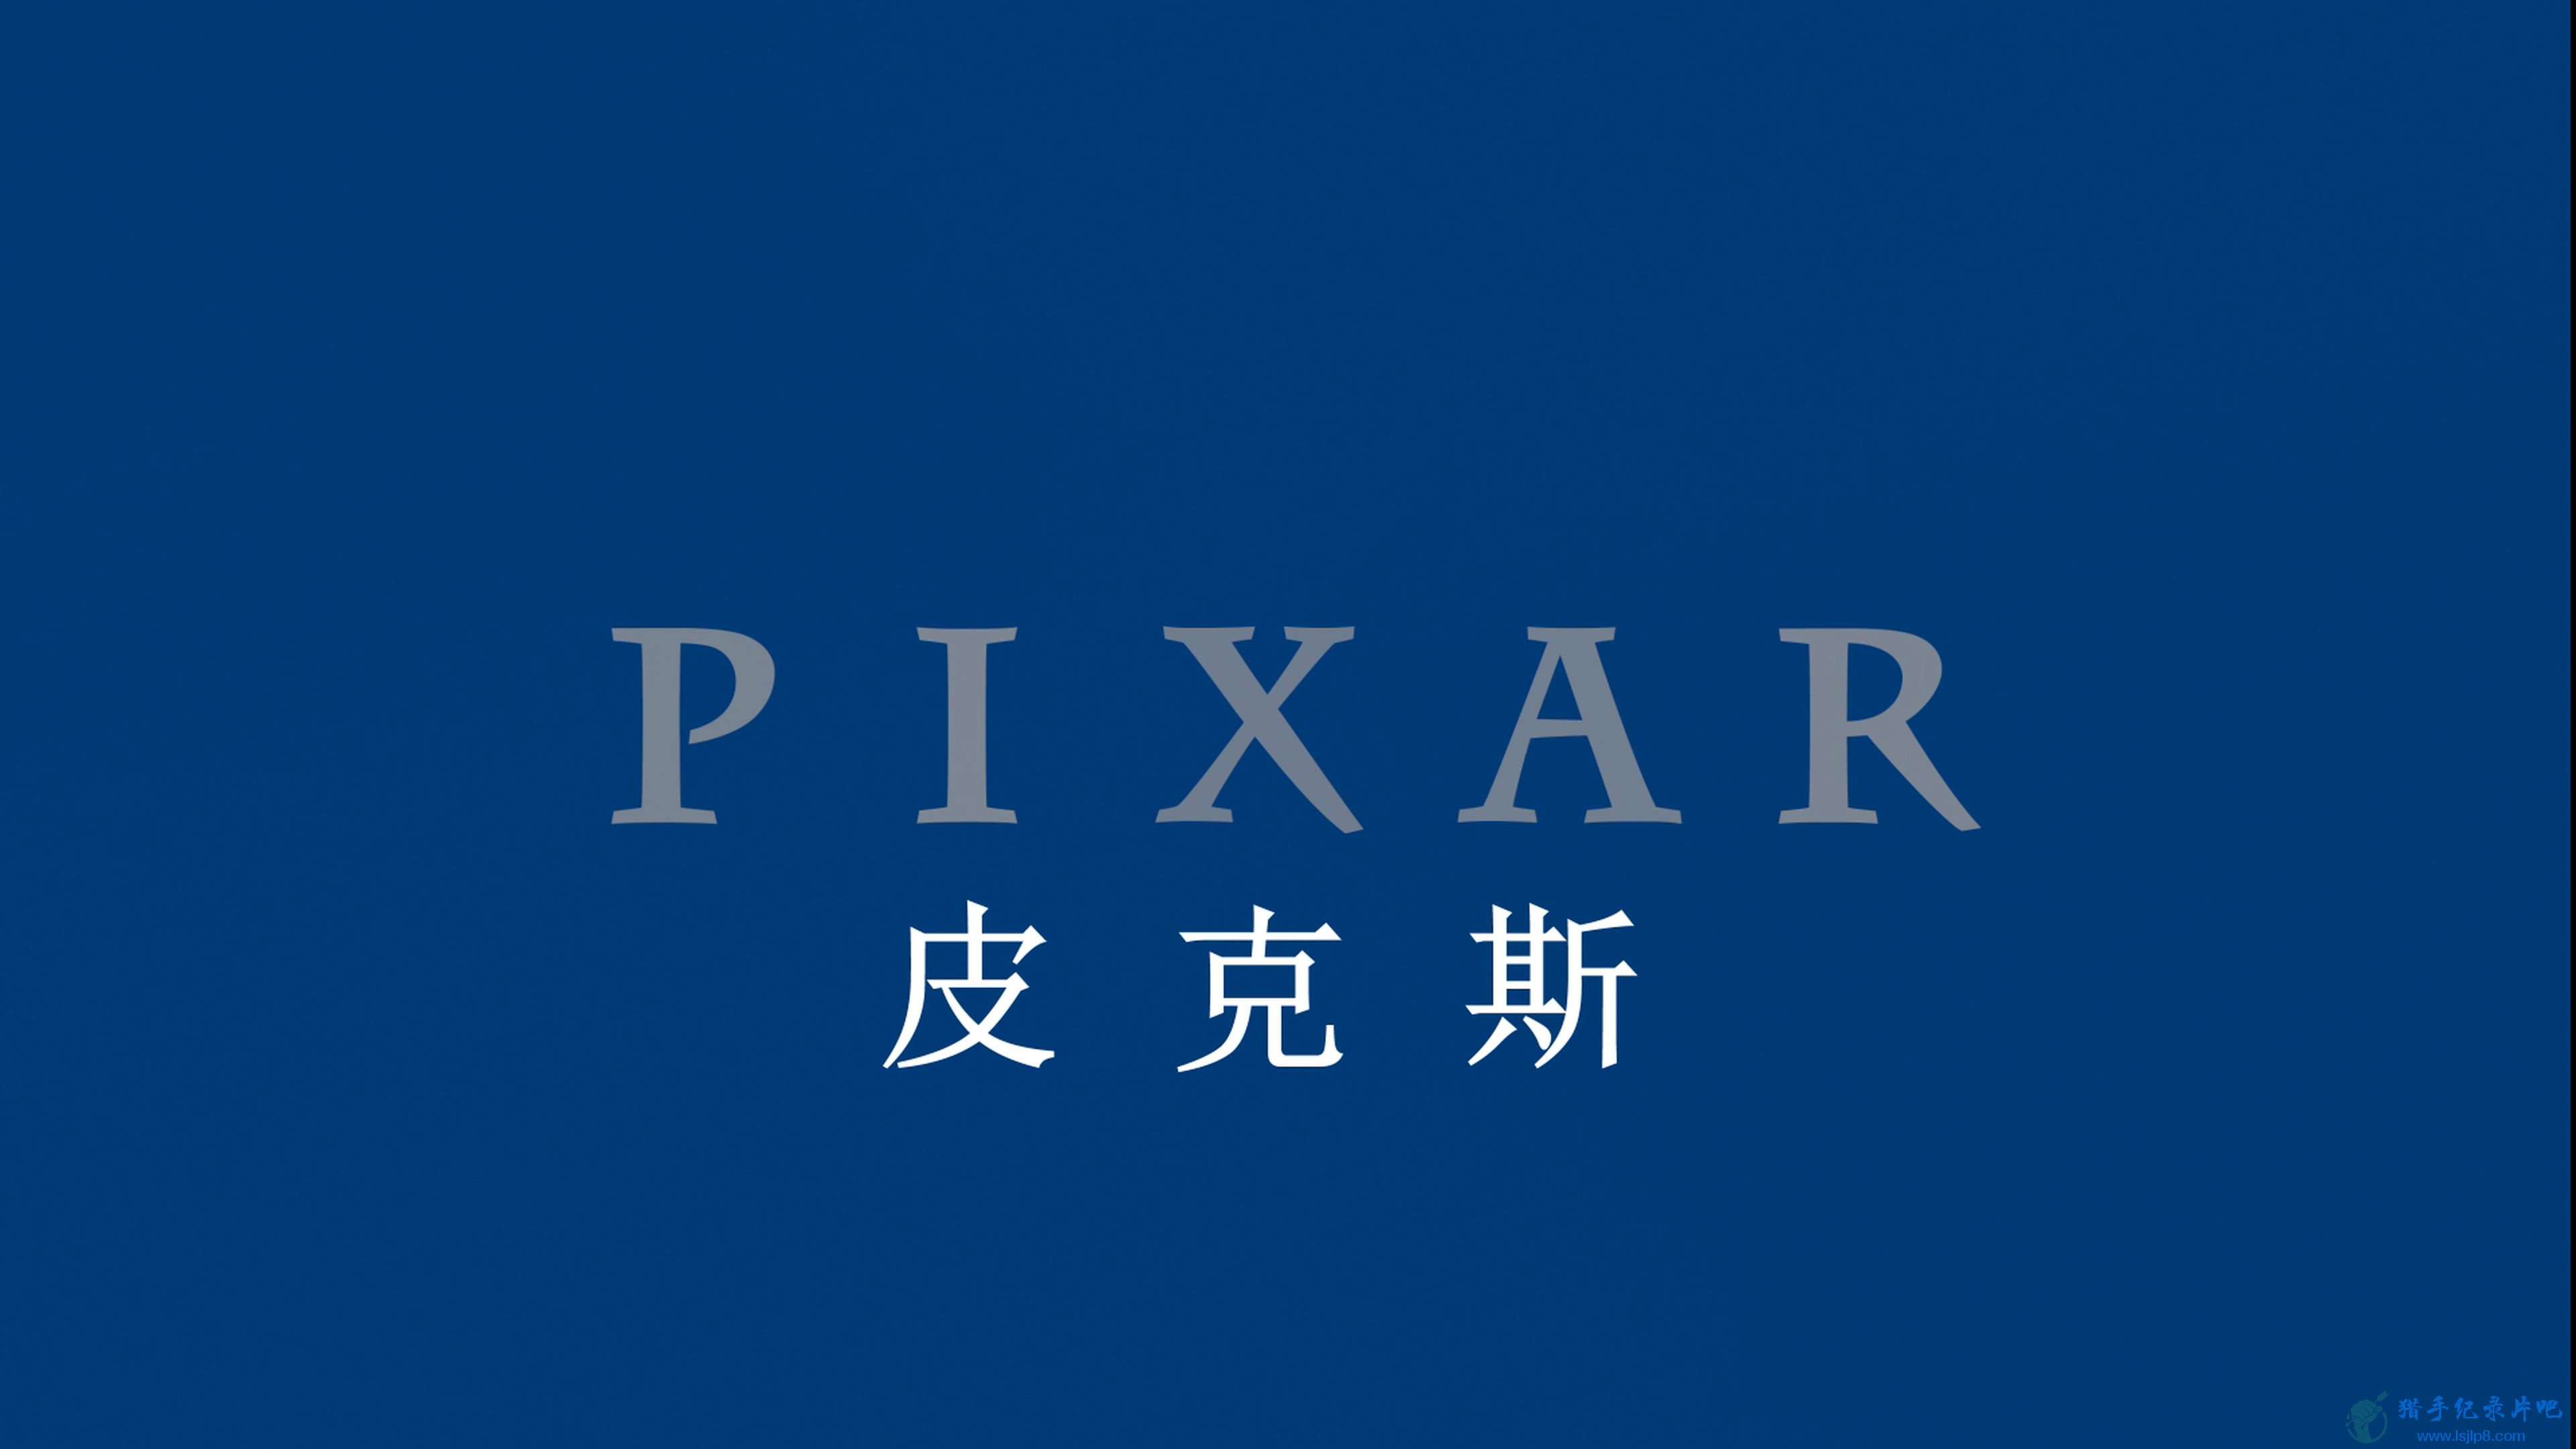 Inside.Pixar.S01E01.HDR.2160p.WEB.h265-KOGi.mkv_20210810_153523.029.jpg